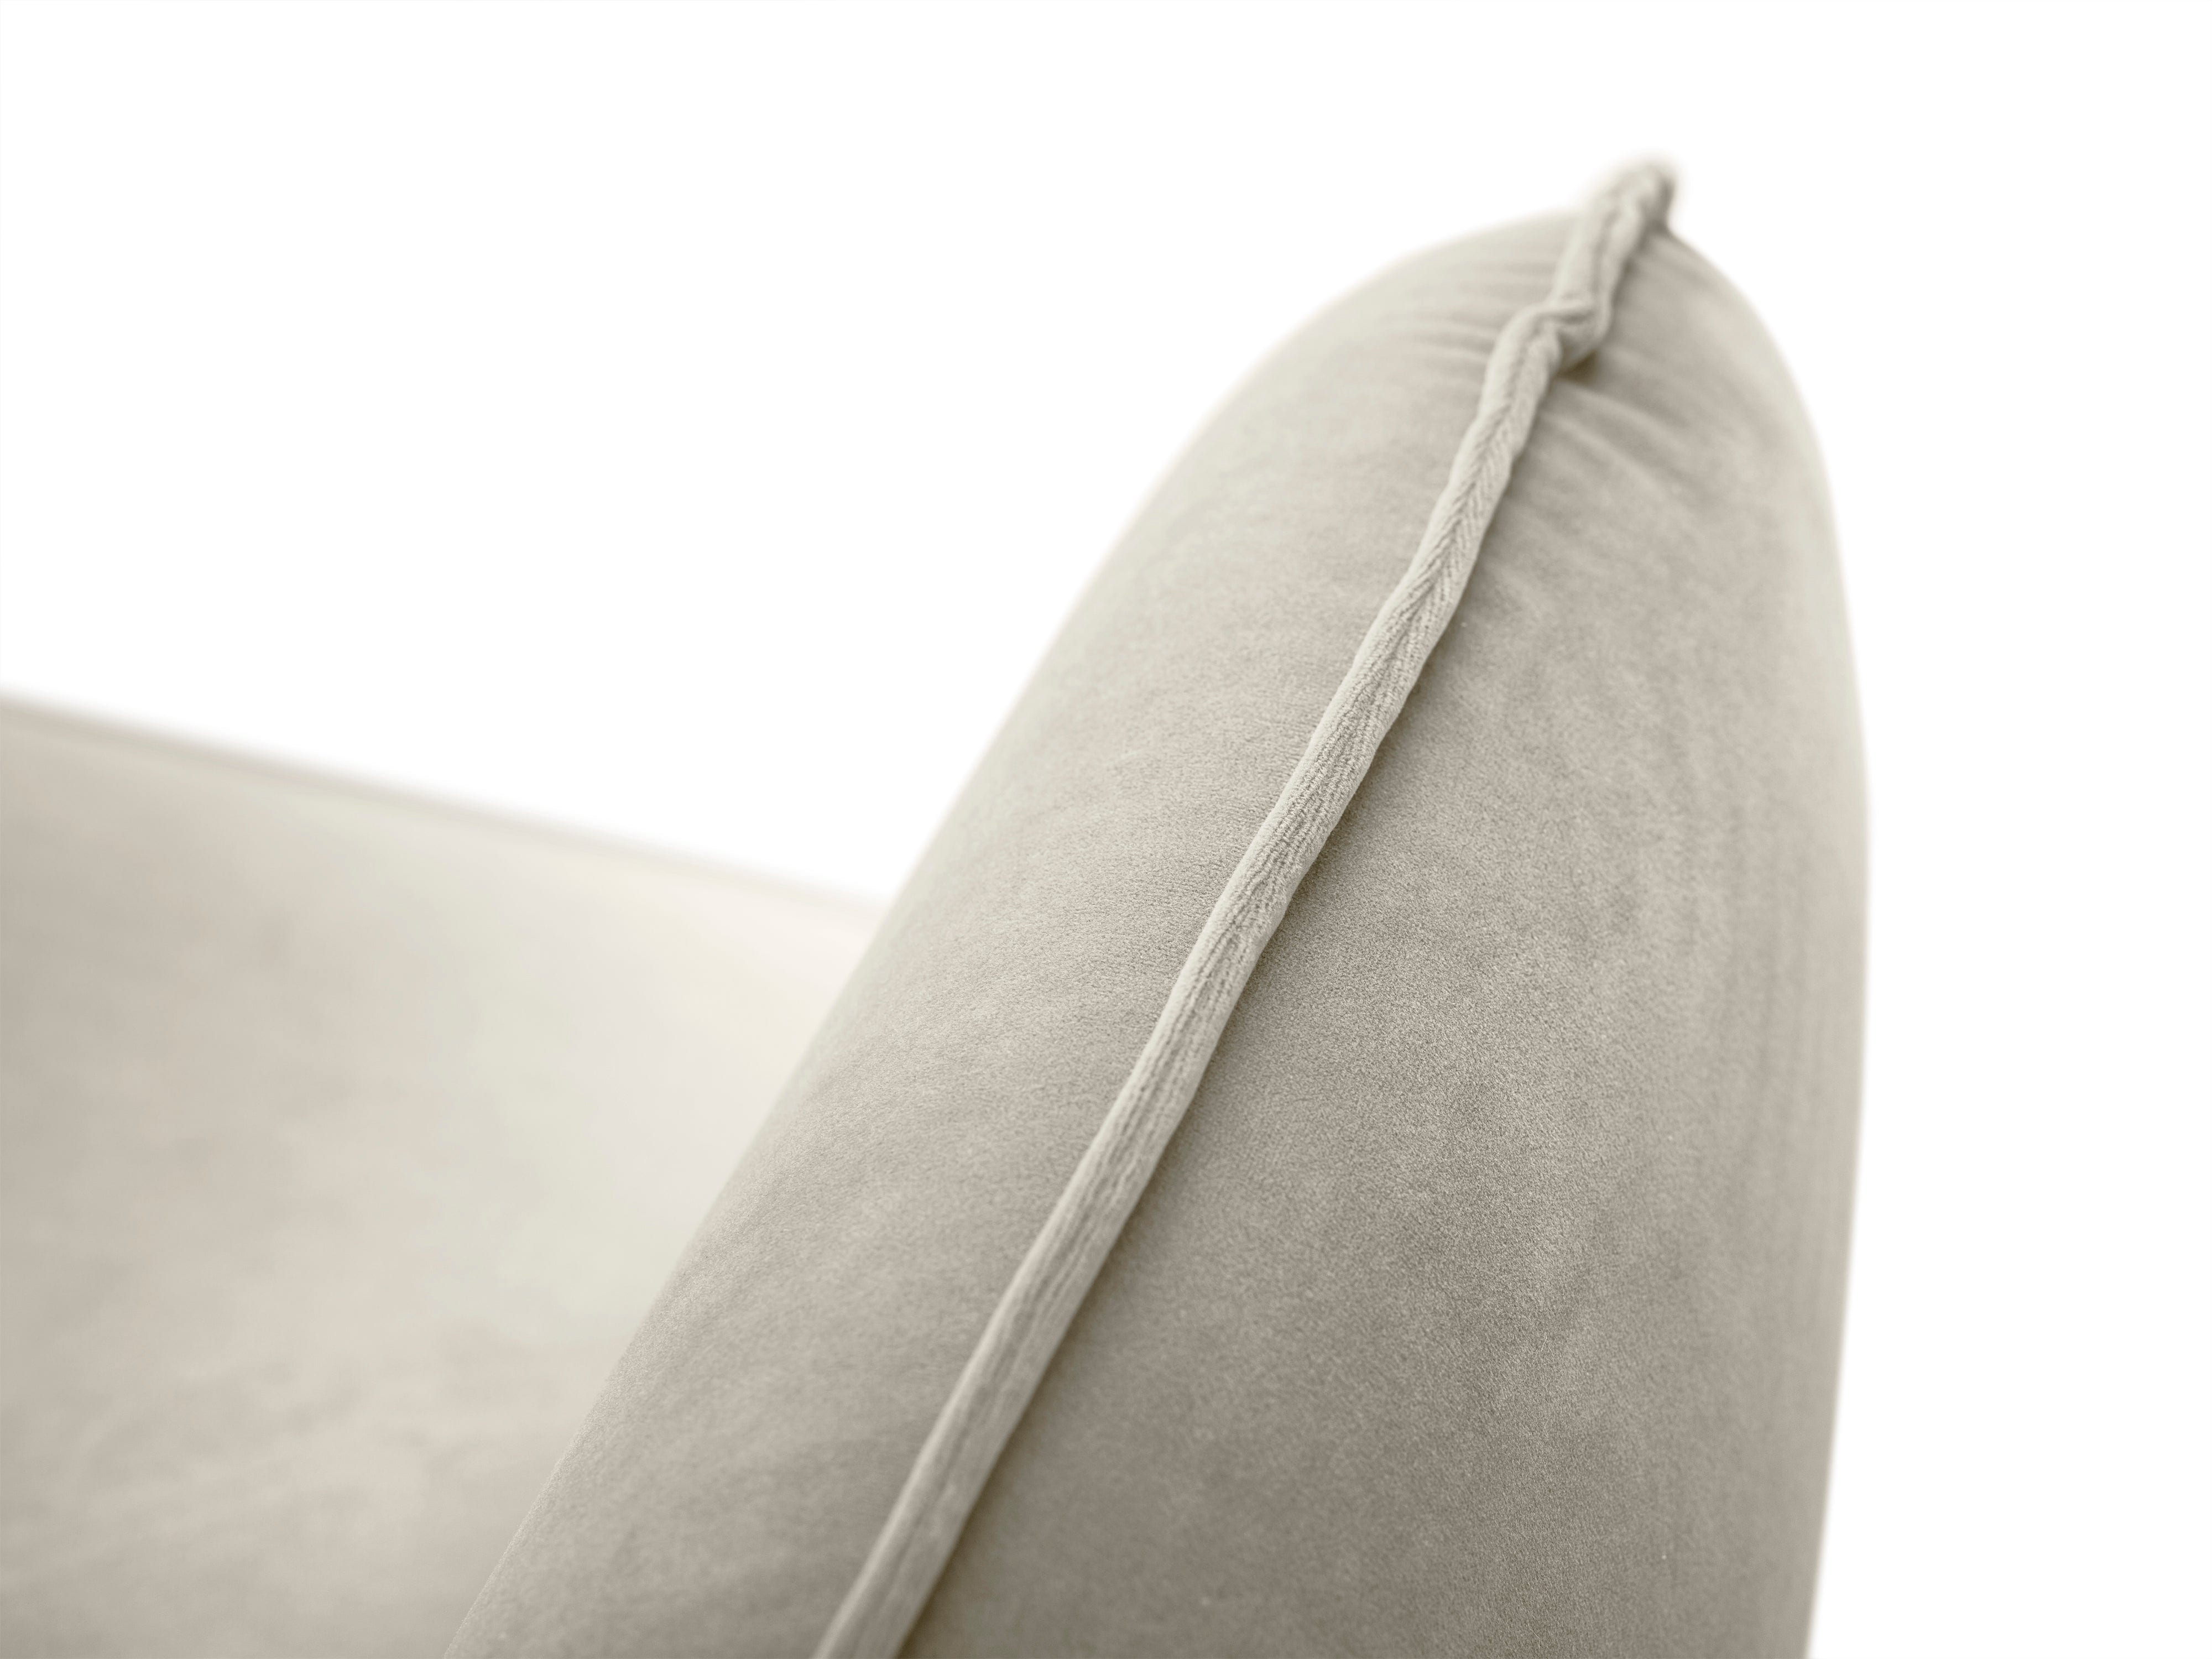 Velvet 2-seater sofa VIENNA beige with black base